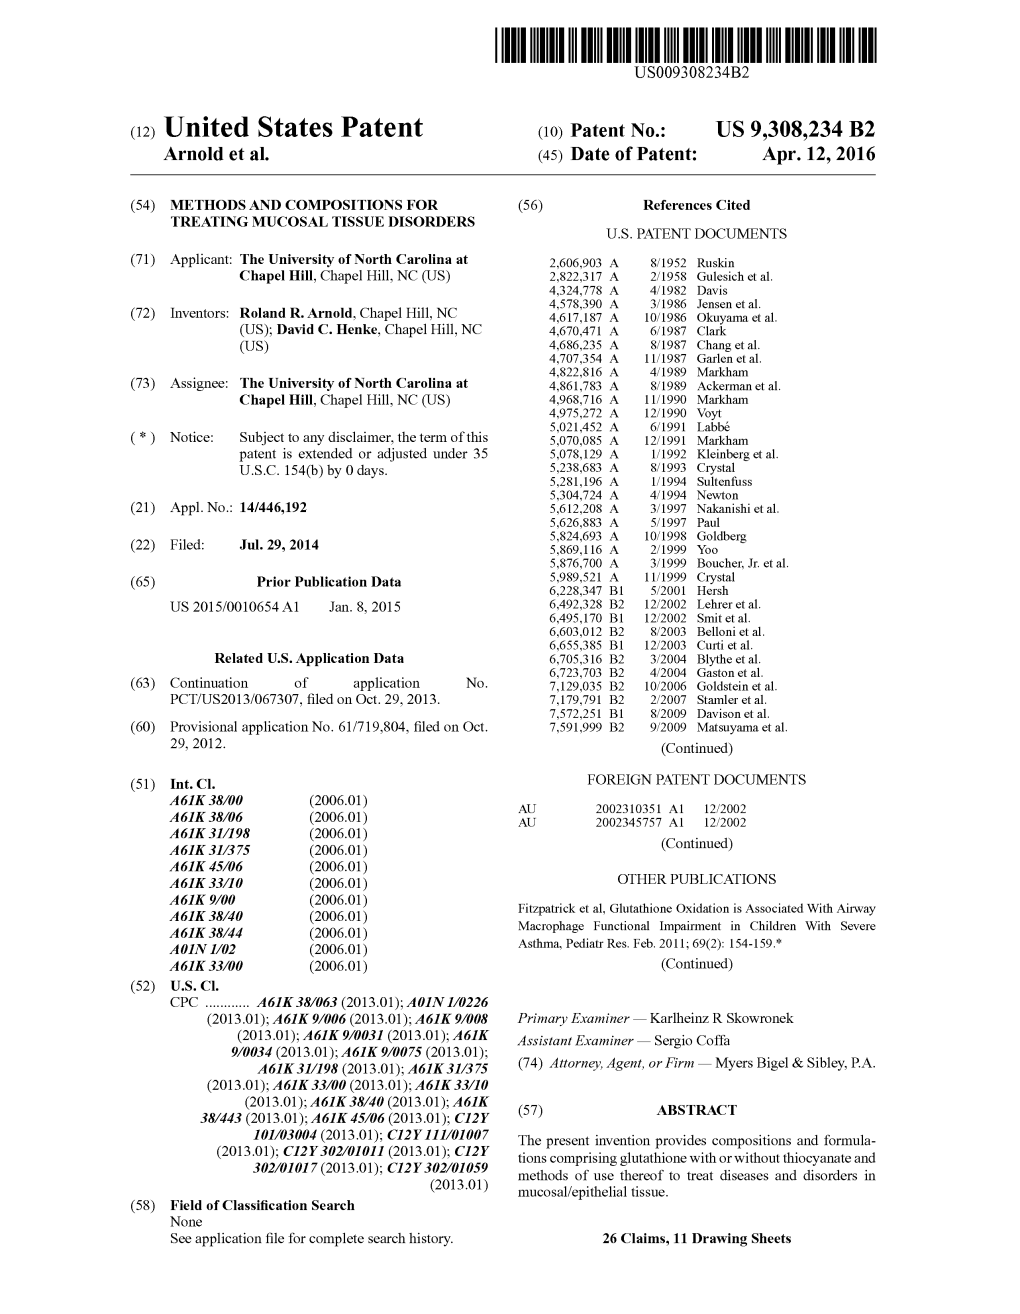 (12) United States Patent (10) Patent No.: US 9,308,234 B2 Arnold Et Al